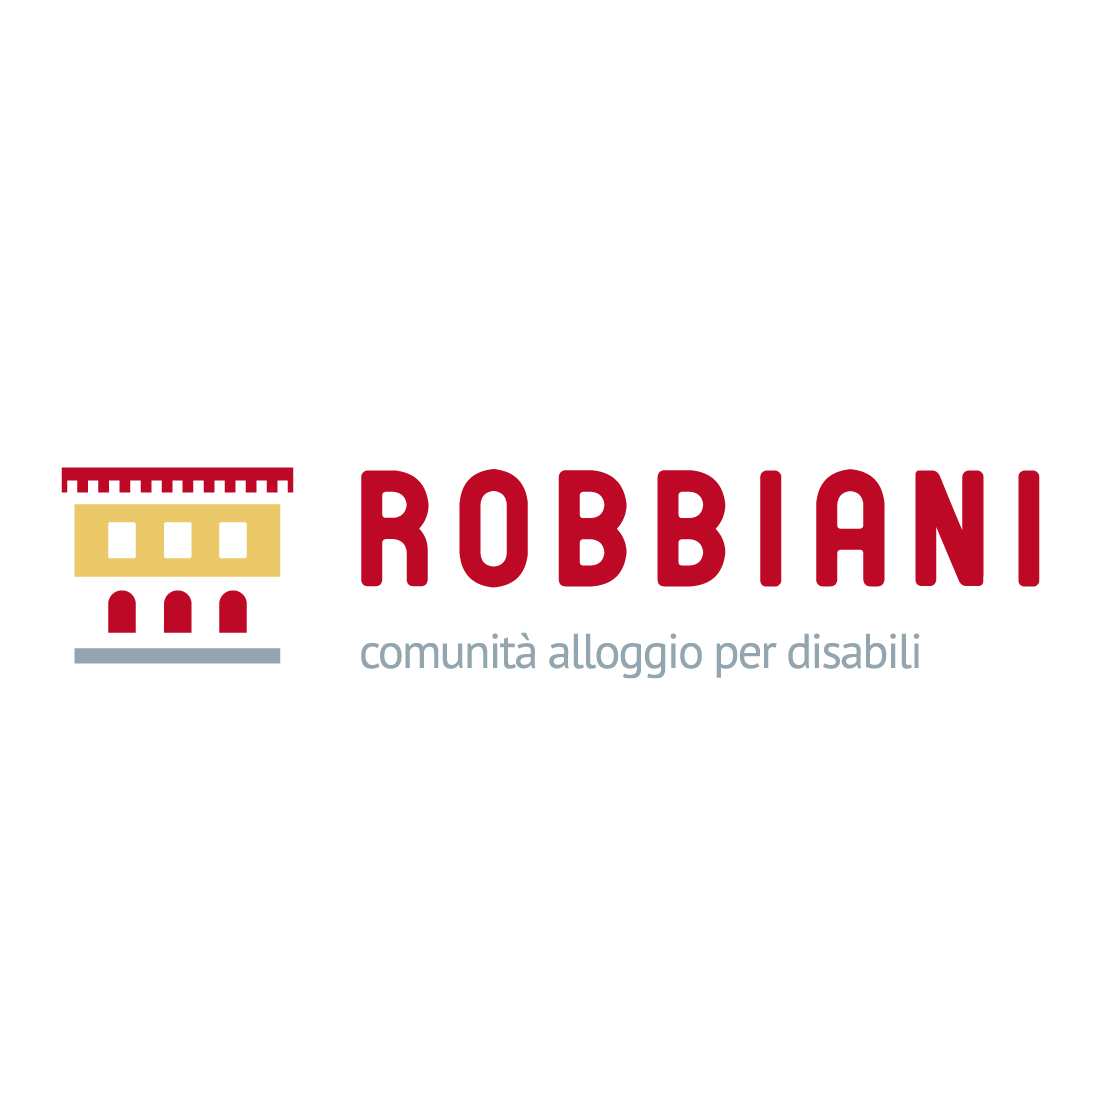 Robbiani logo_Tavola disegno 1